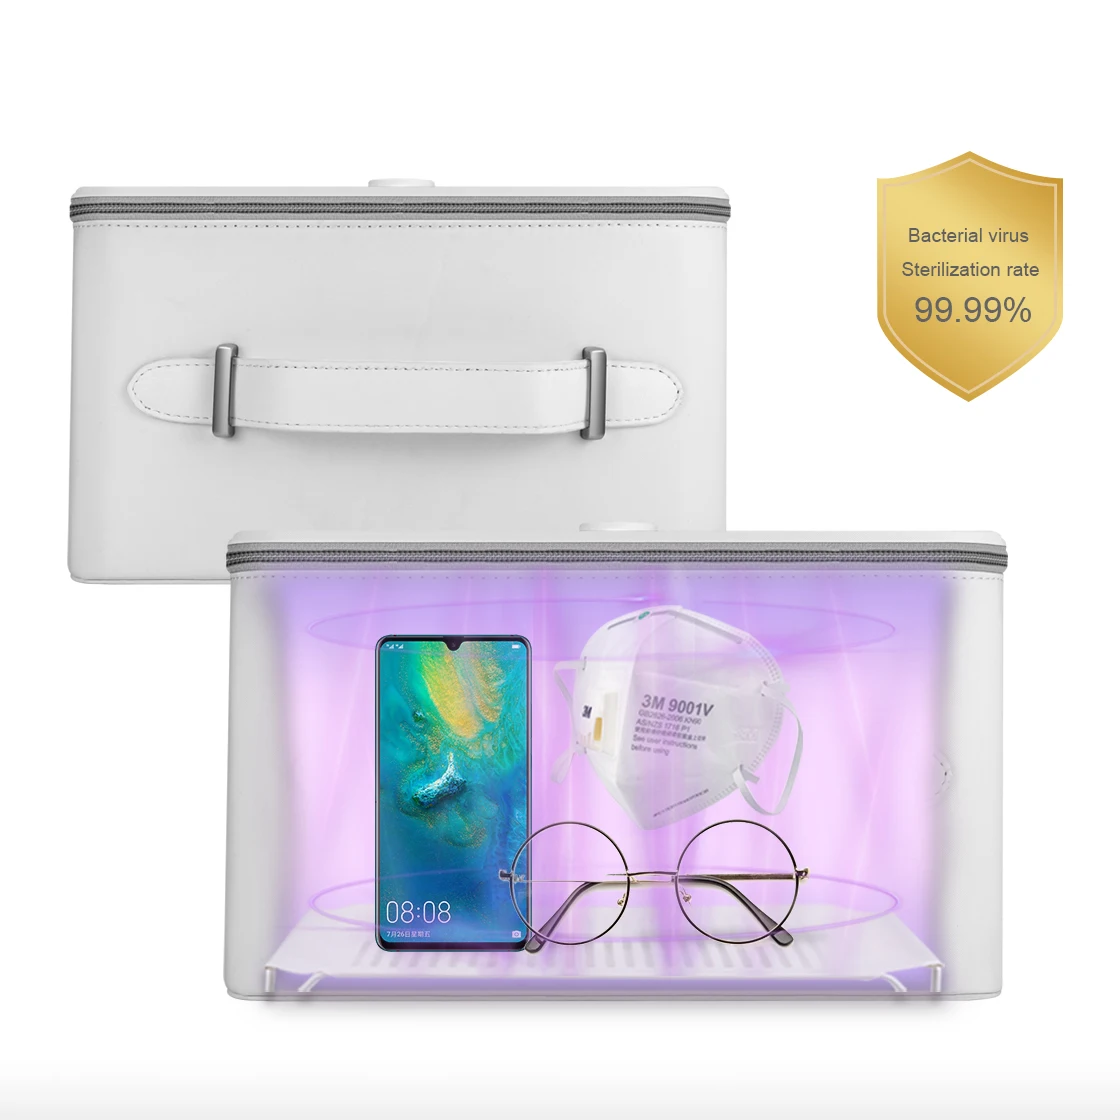 Portable UVC led Germicidal Bag 99.99% sterilization rate CE Disinfection ultraviolet Box Baby UV light Storage hand sanitizer